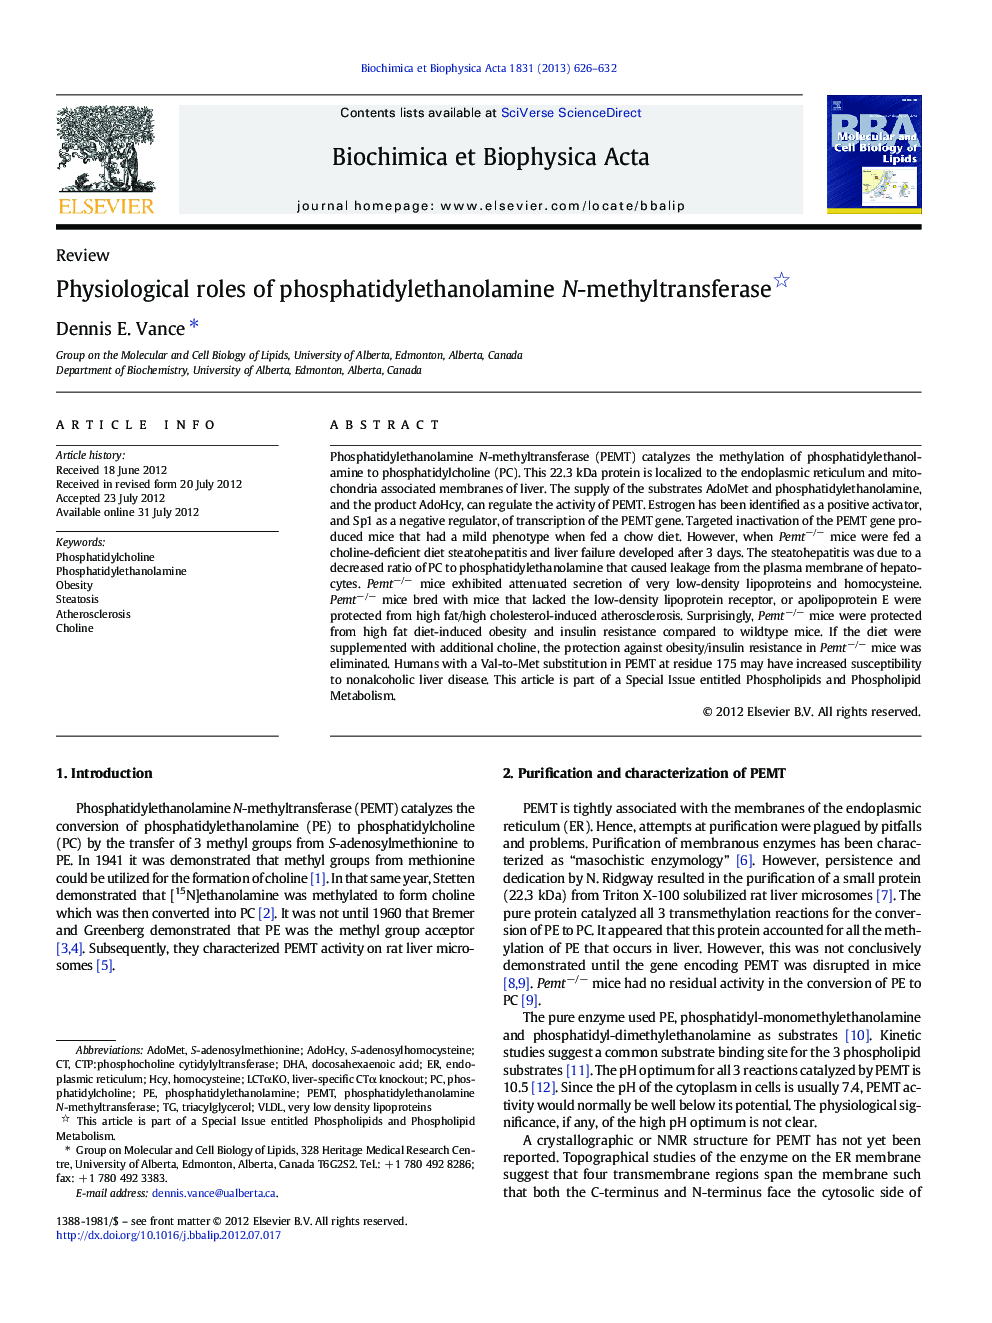 Physiological roles of phosphatidylethanolamine N-methyltransferase